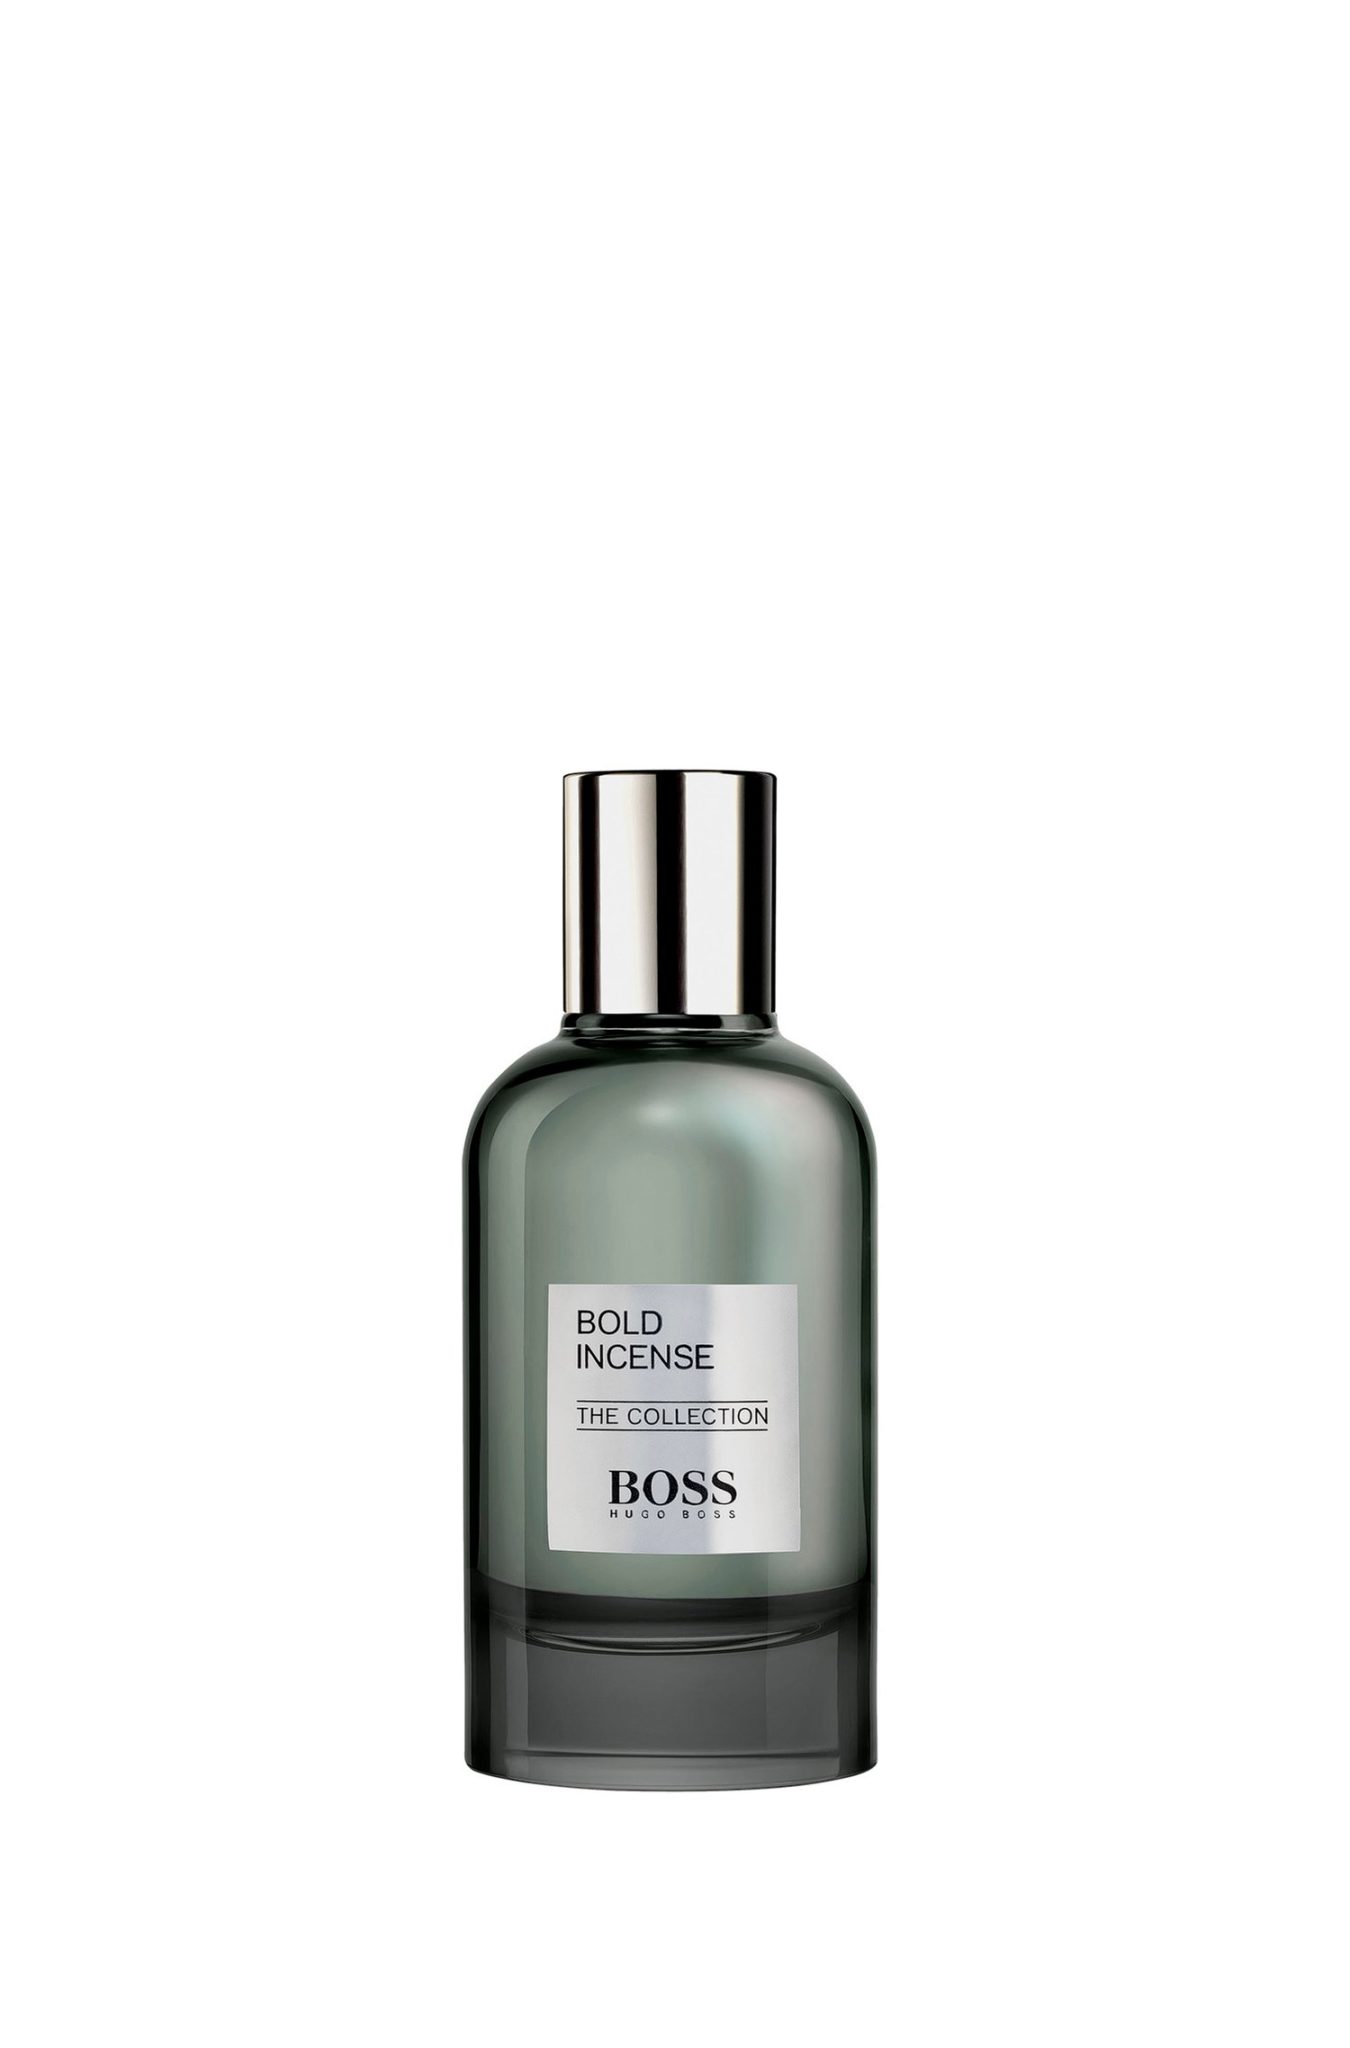 Hugo Boss Eau de parfum BOSS The Collection Bold Incense